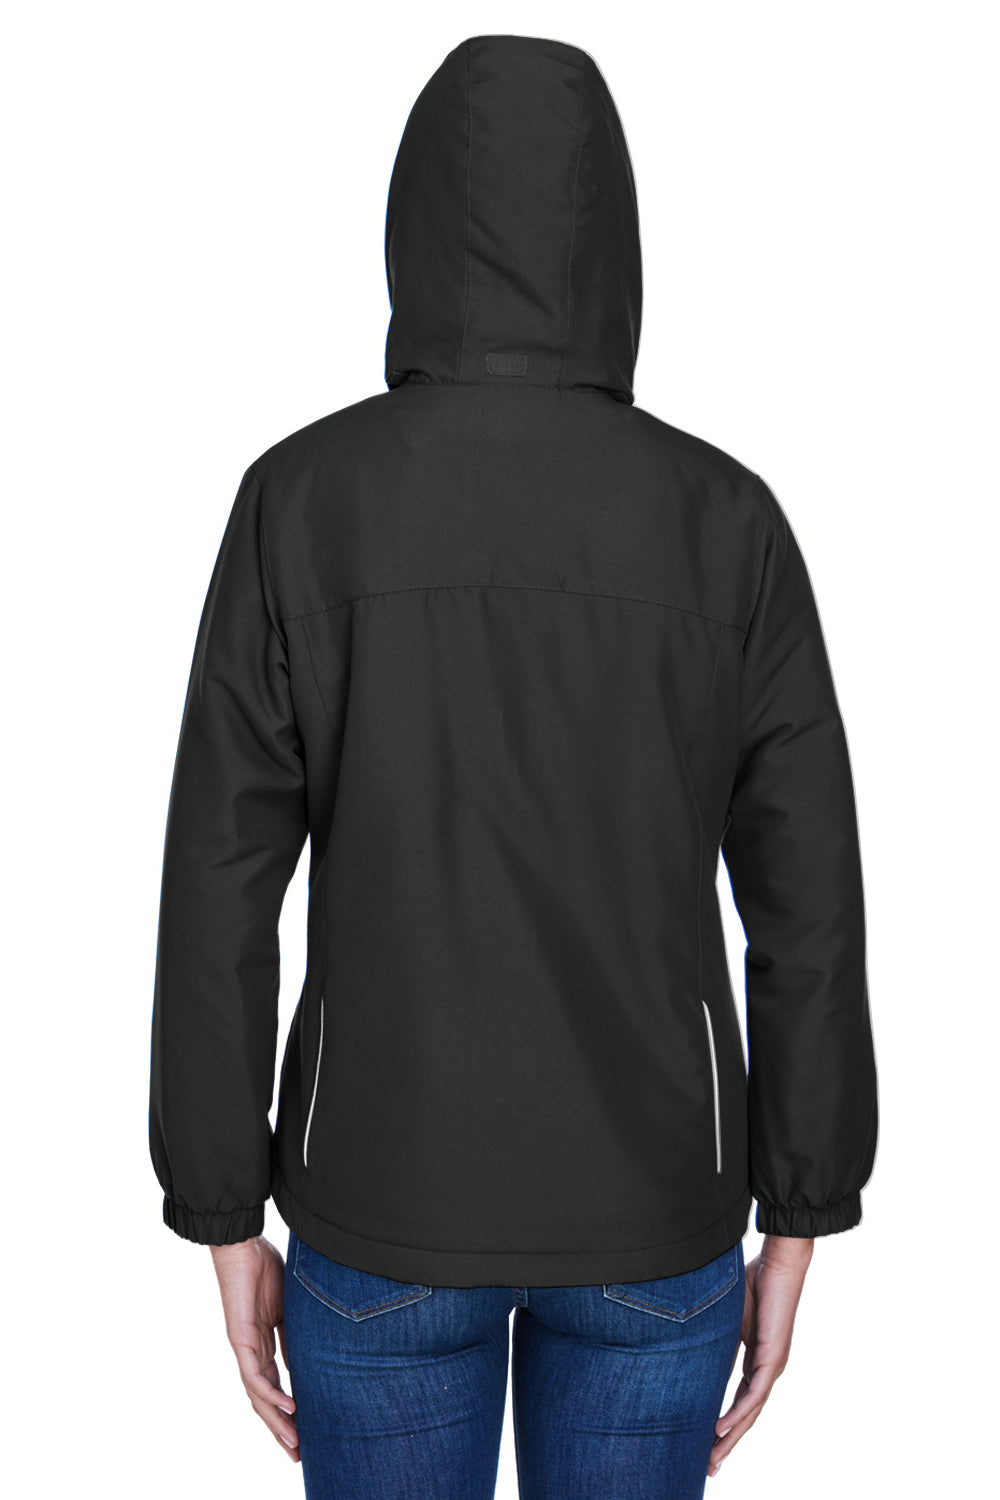 Core 365 78189 Womens Brisk Full Zip Hooded Jacket Black Back